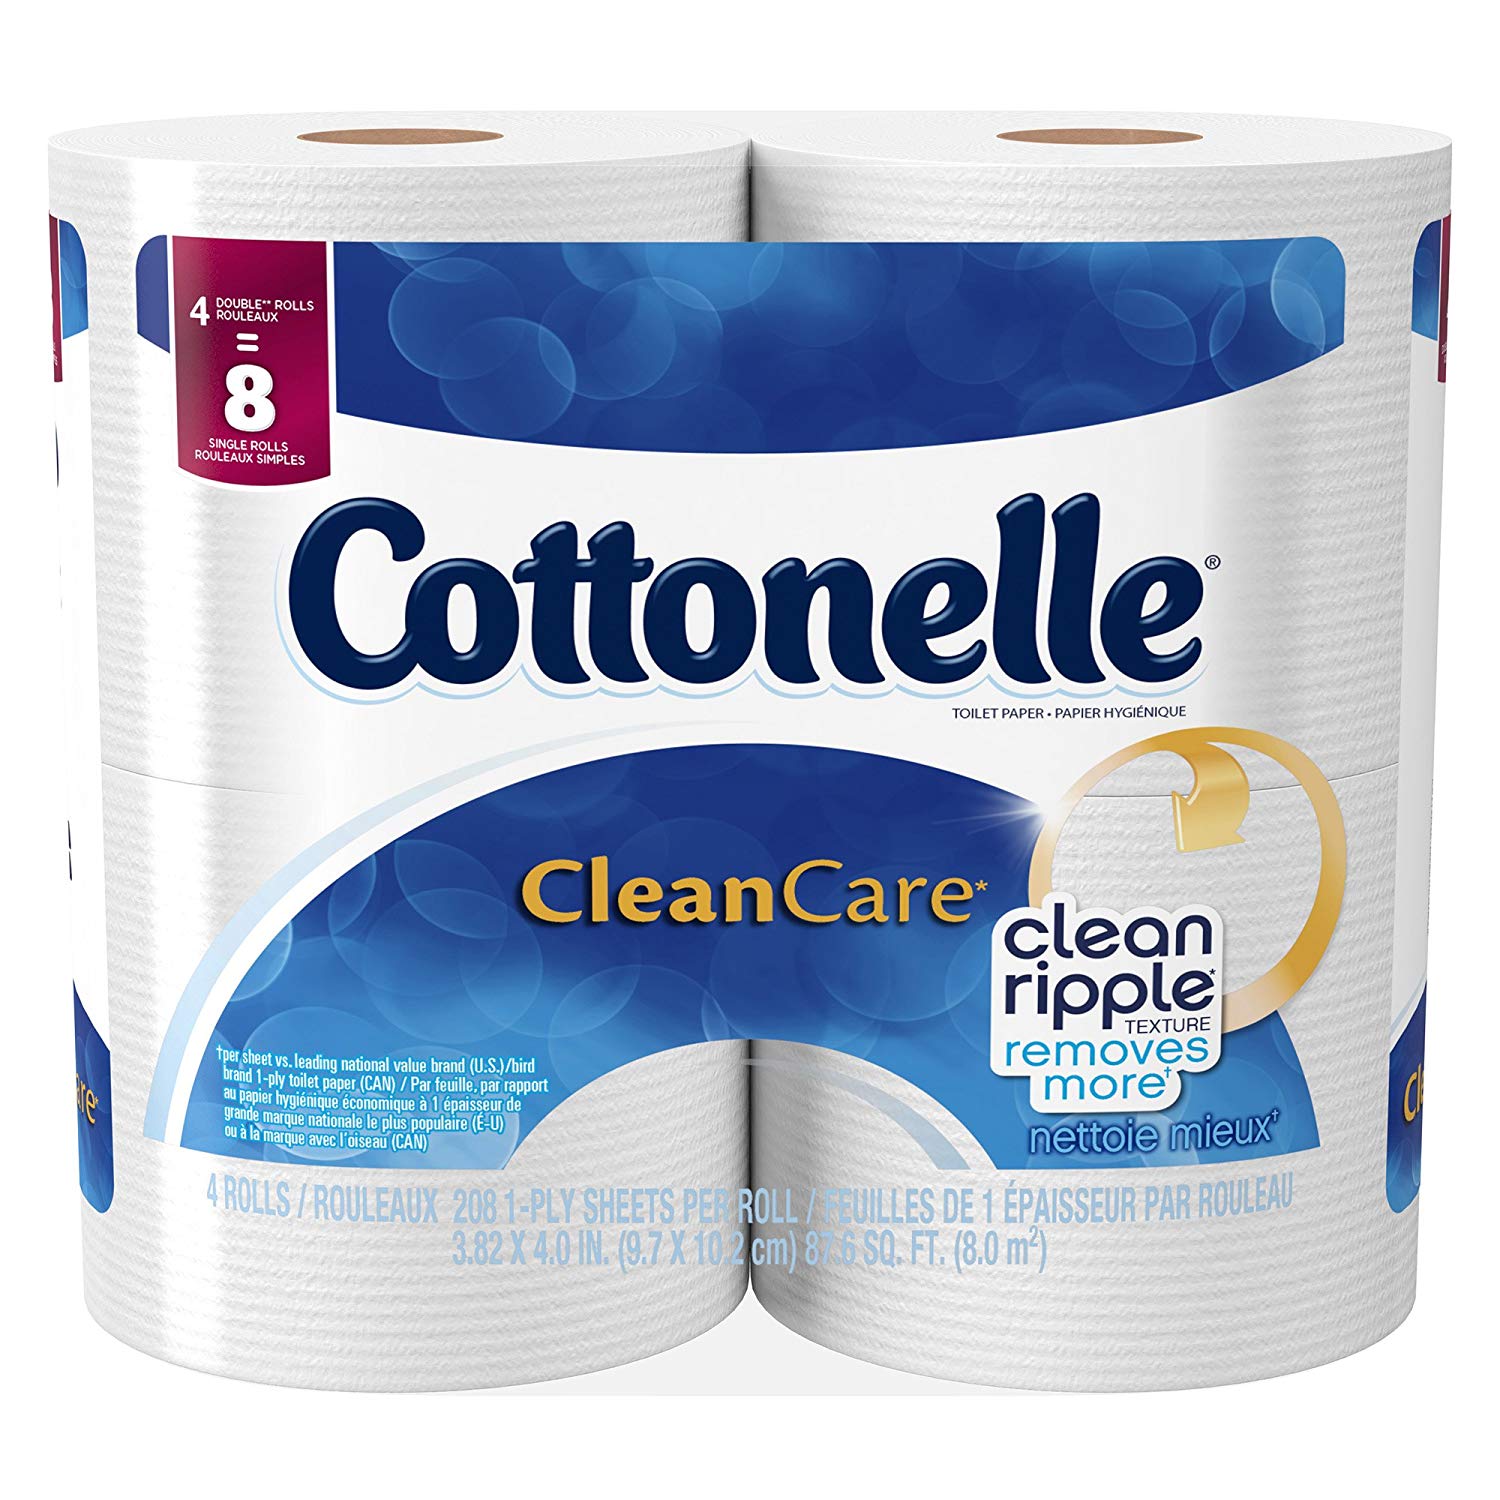 COTTONELLE - ULTRA CLEAN CARE - 4 ROLLS